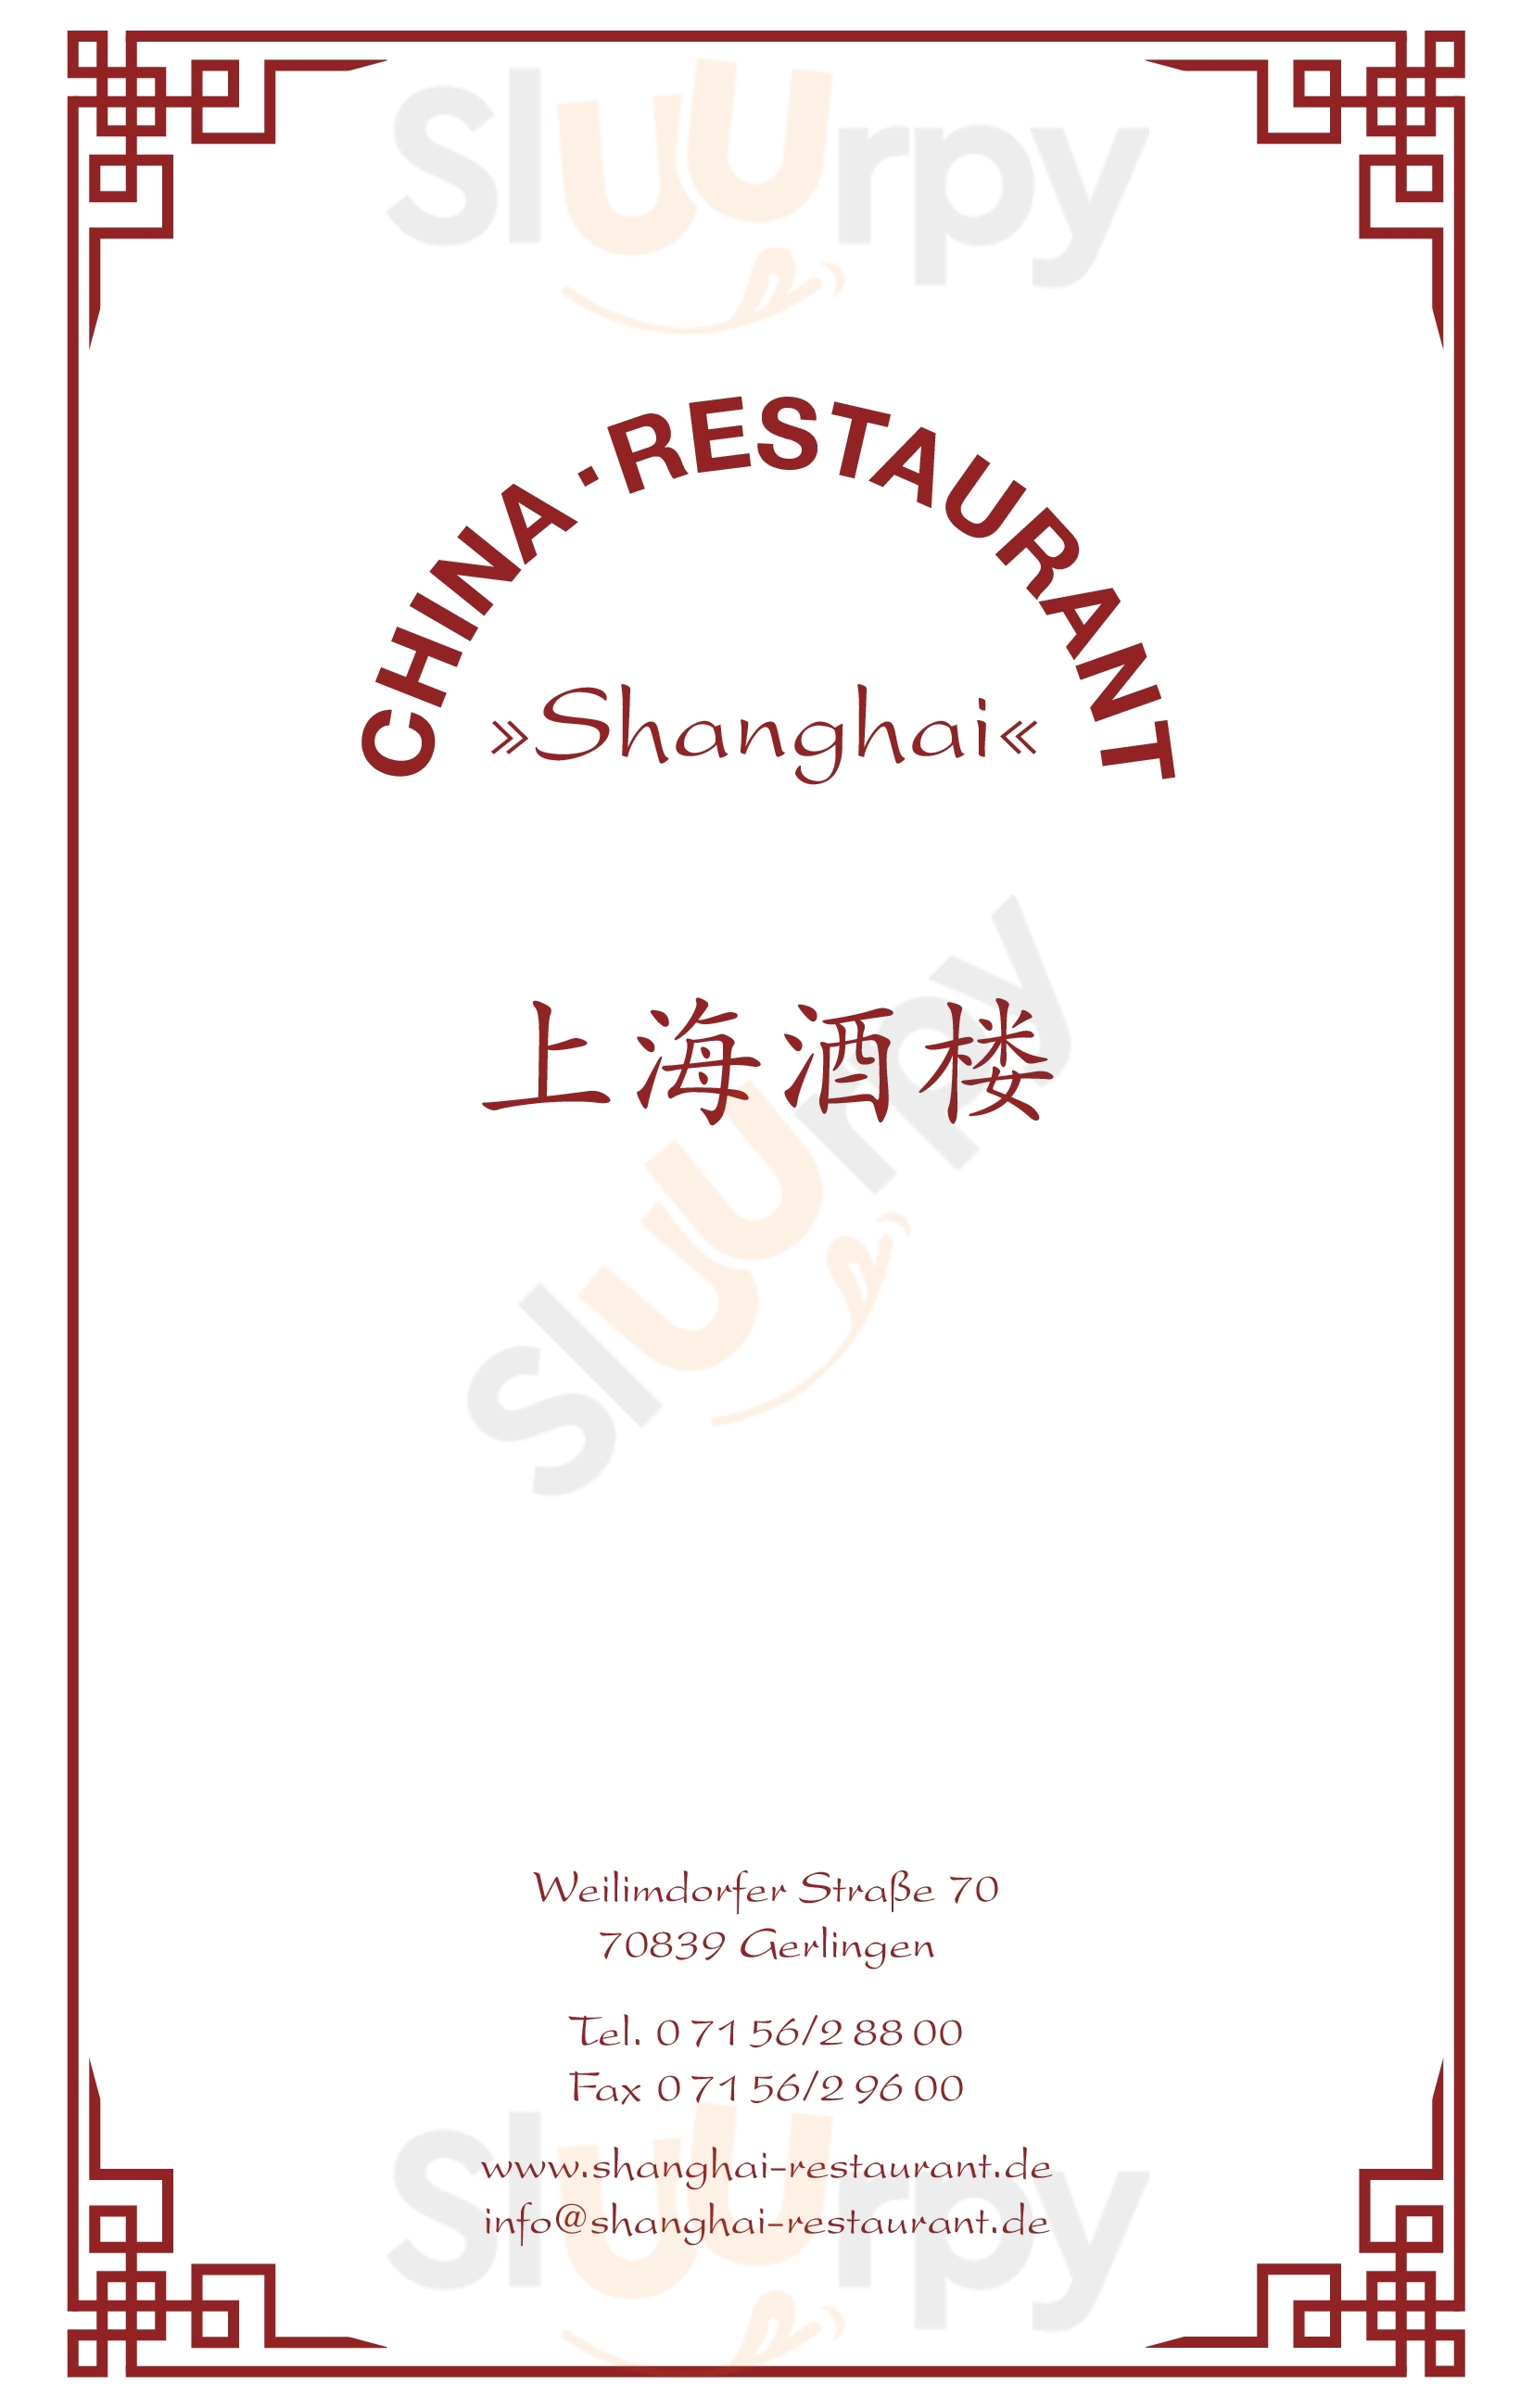 China-restaurant Shanghai Gerlingen Menu - 1